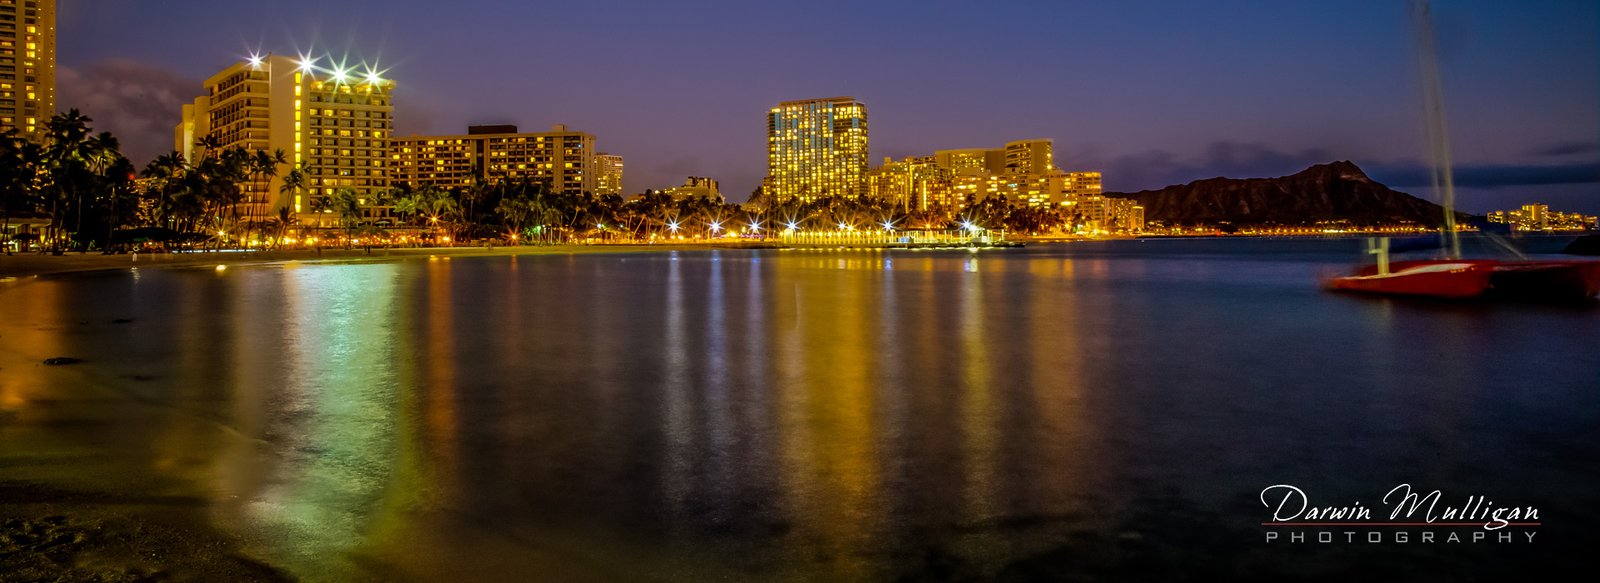 Waikiki-Beach-Honolulu-Hawaii-at-night-with-Diamond-Head-in-background